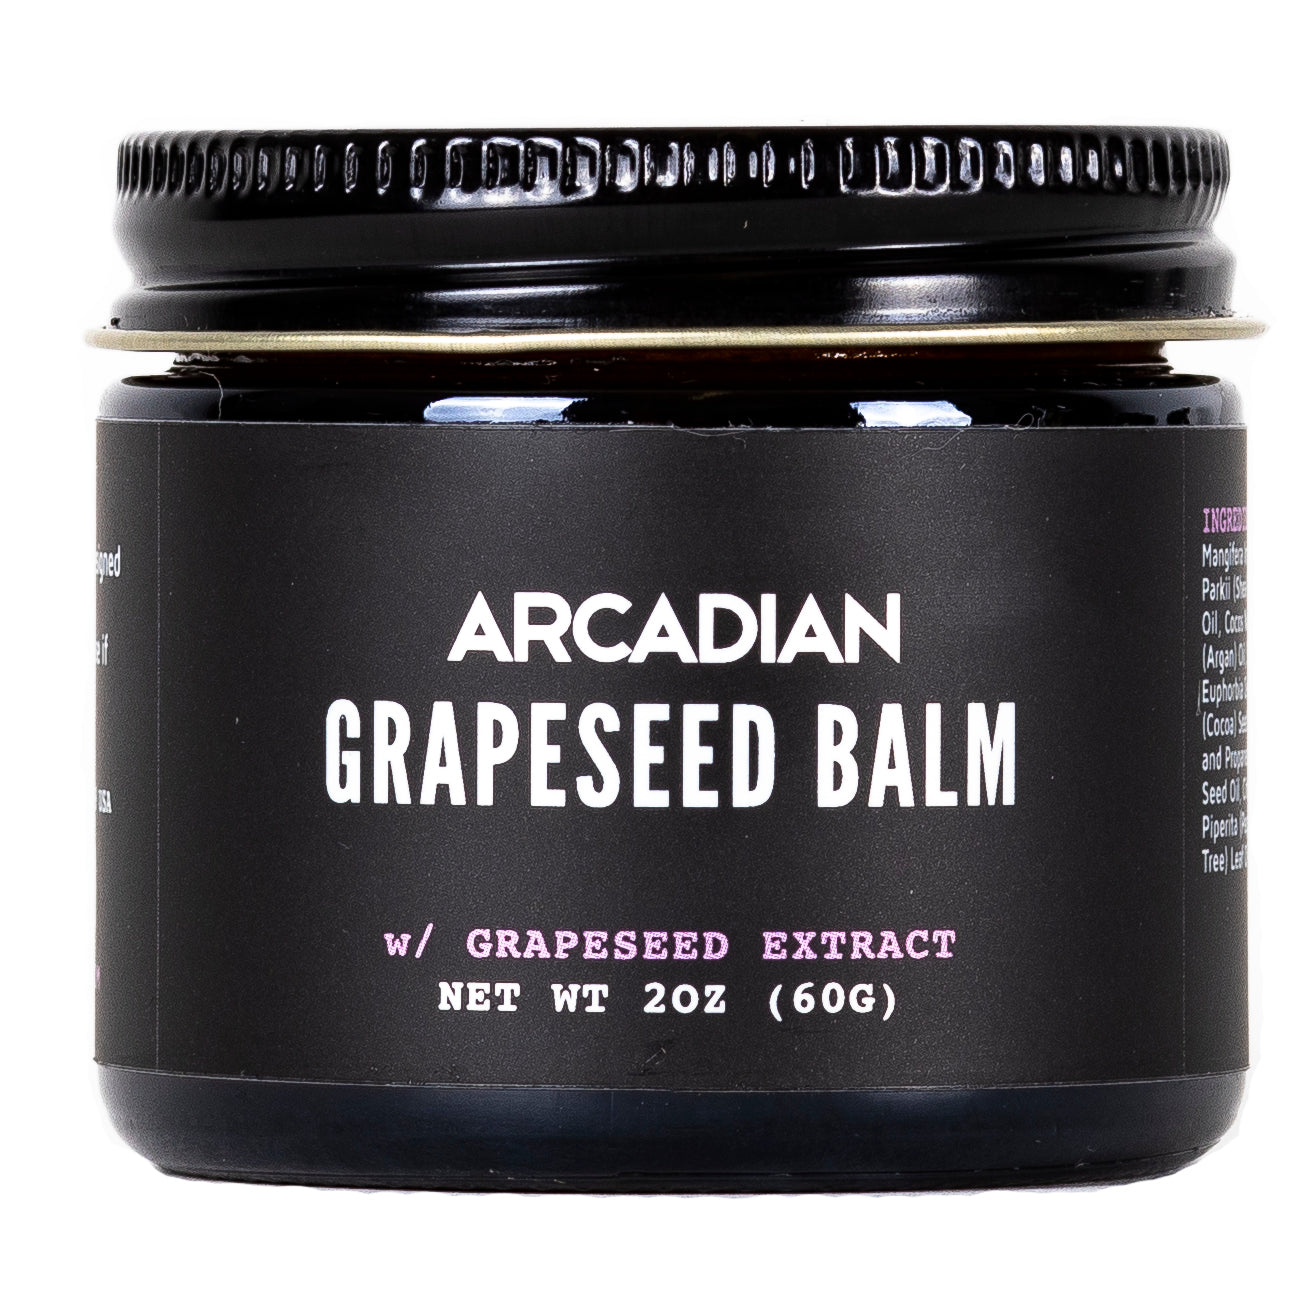 Grapeseed Balm - Arcadian Grooming: Pomade, Beard Care, Men's Grooming Supplies